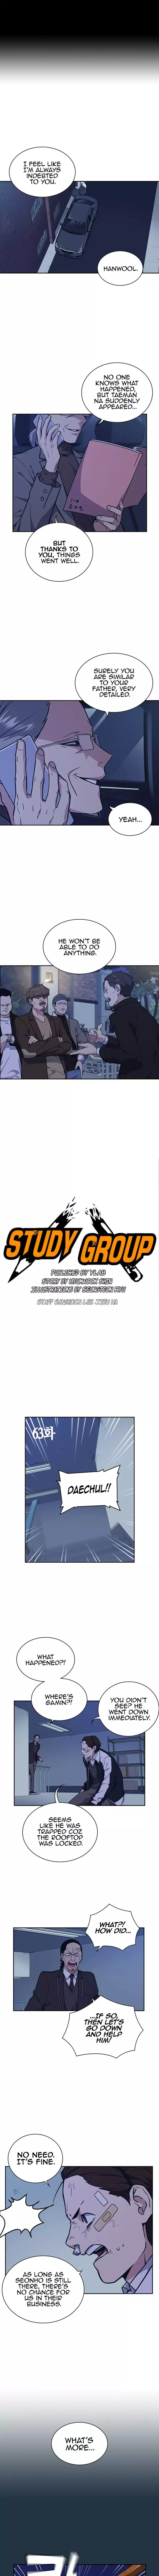 Study Group 63 1